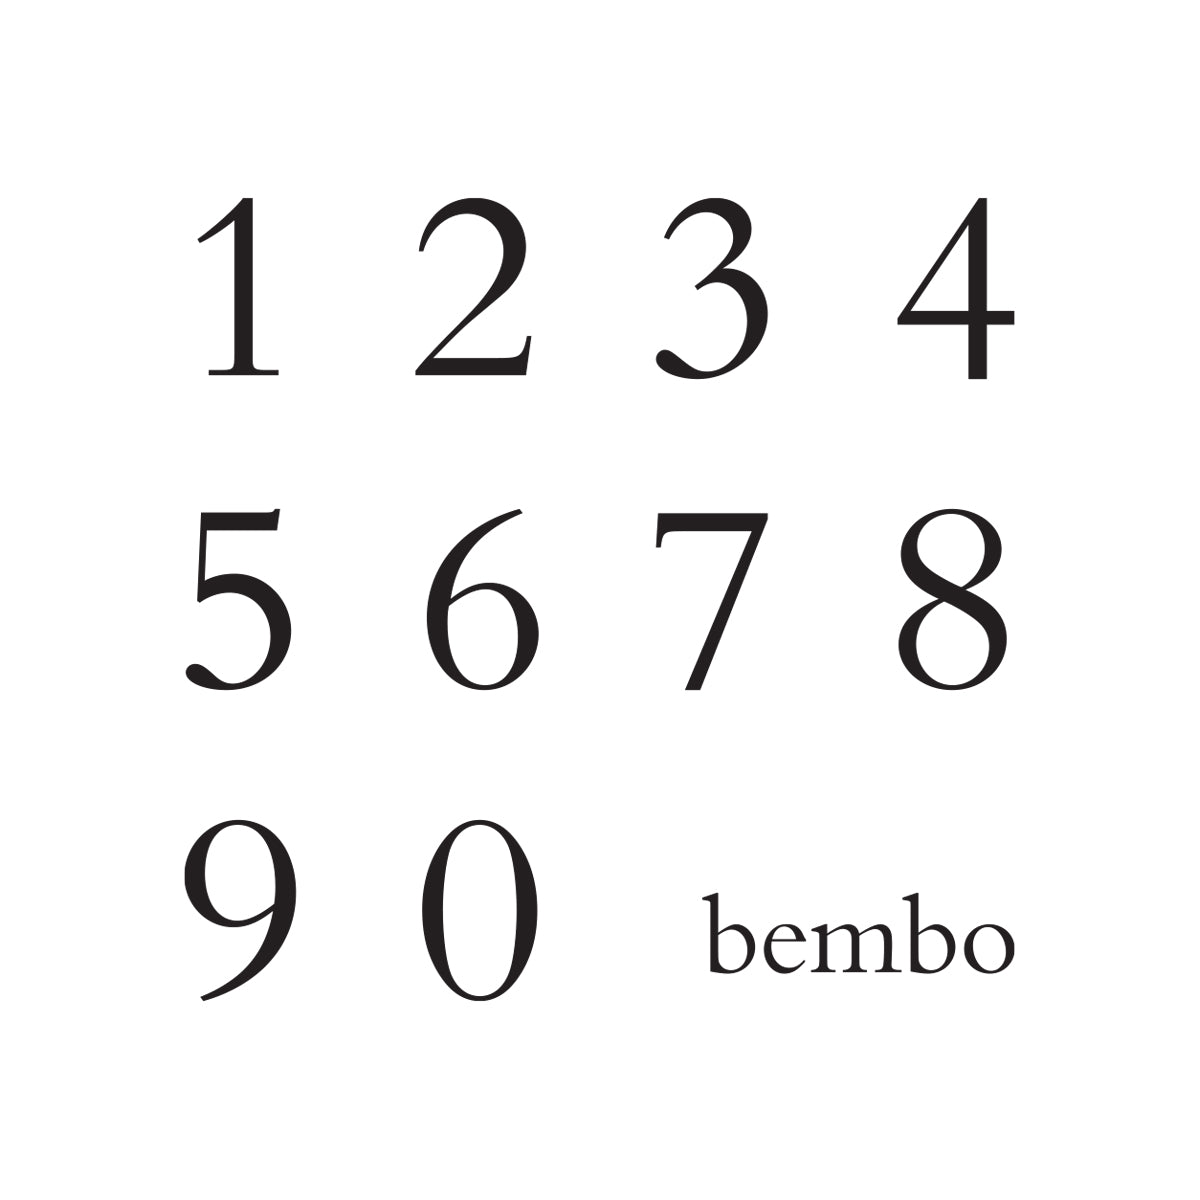 Bembo Number.